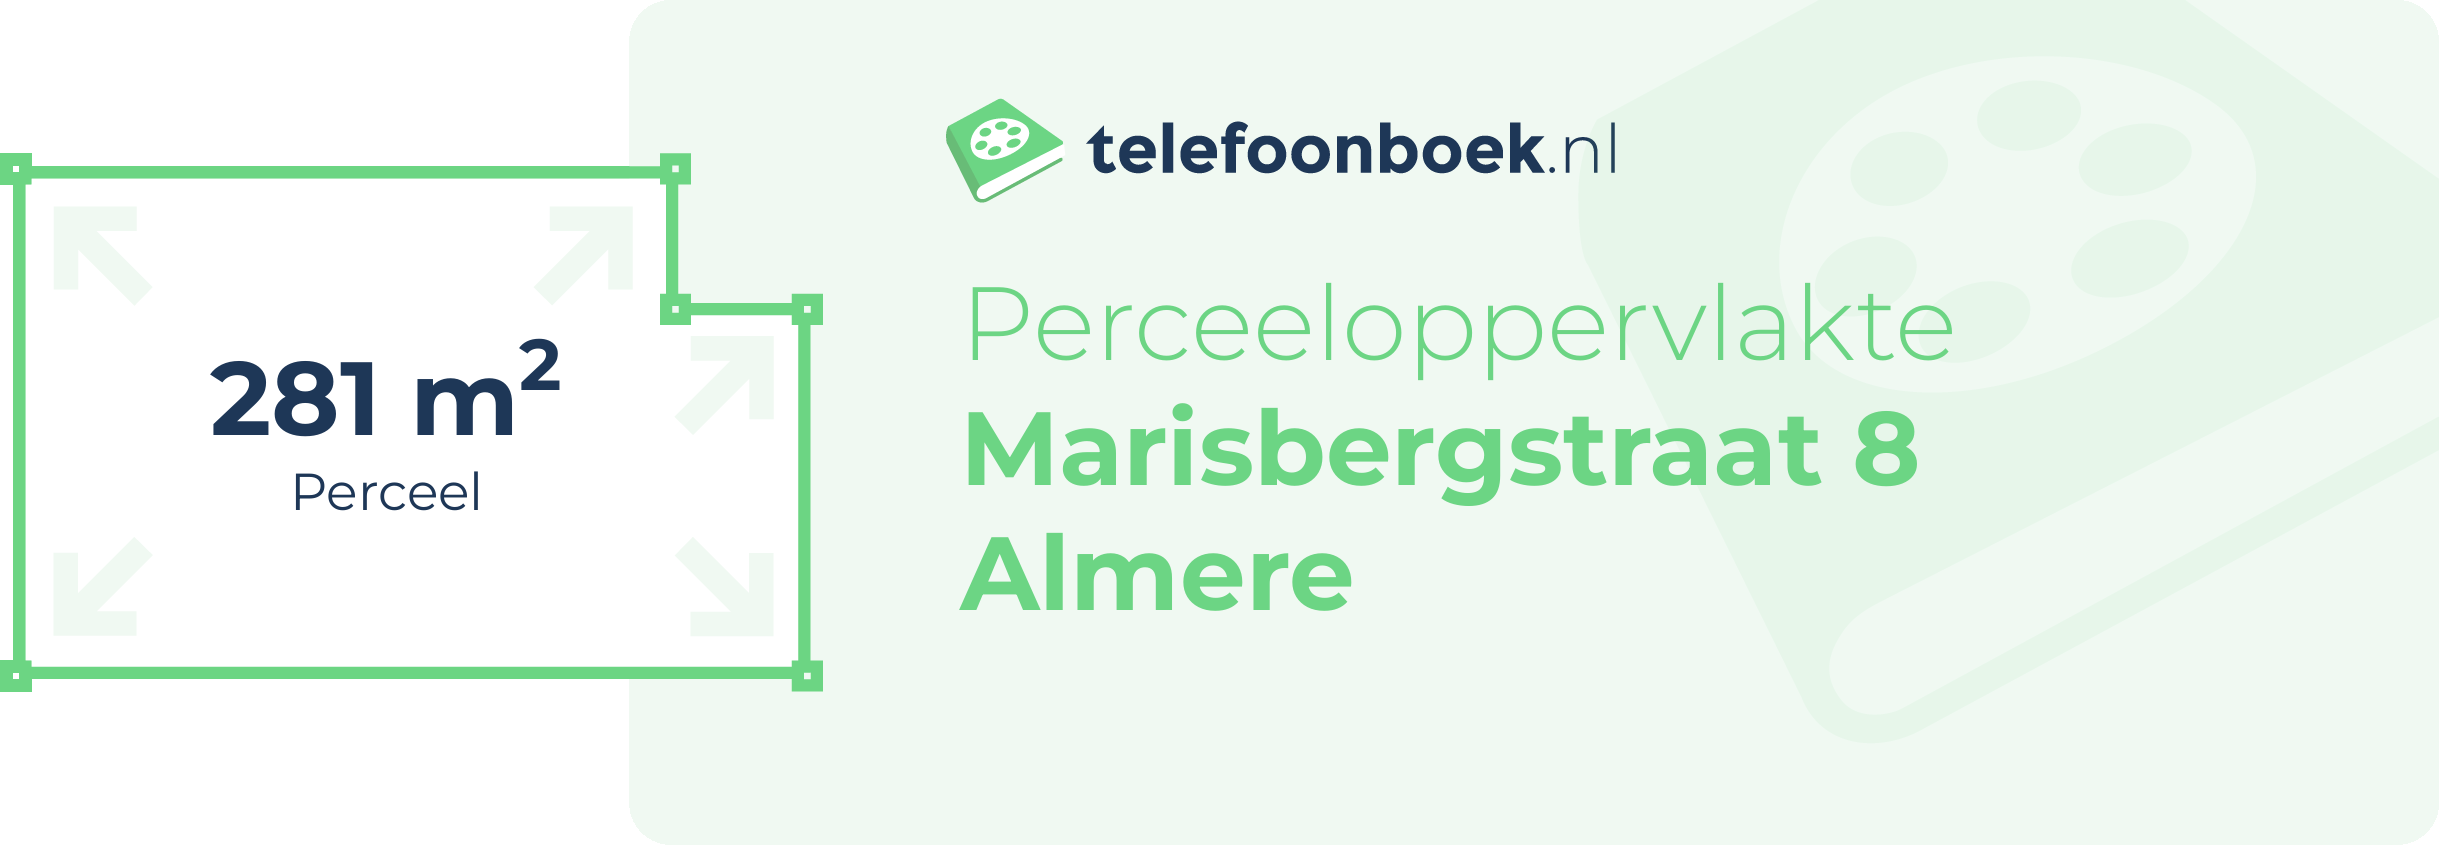 Perceeloppervlakte Marisbergstraat 8 Almere